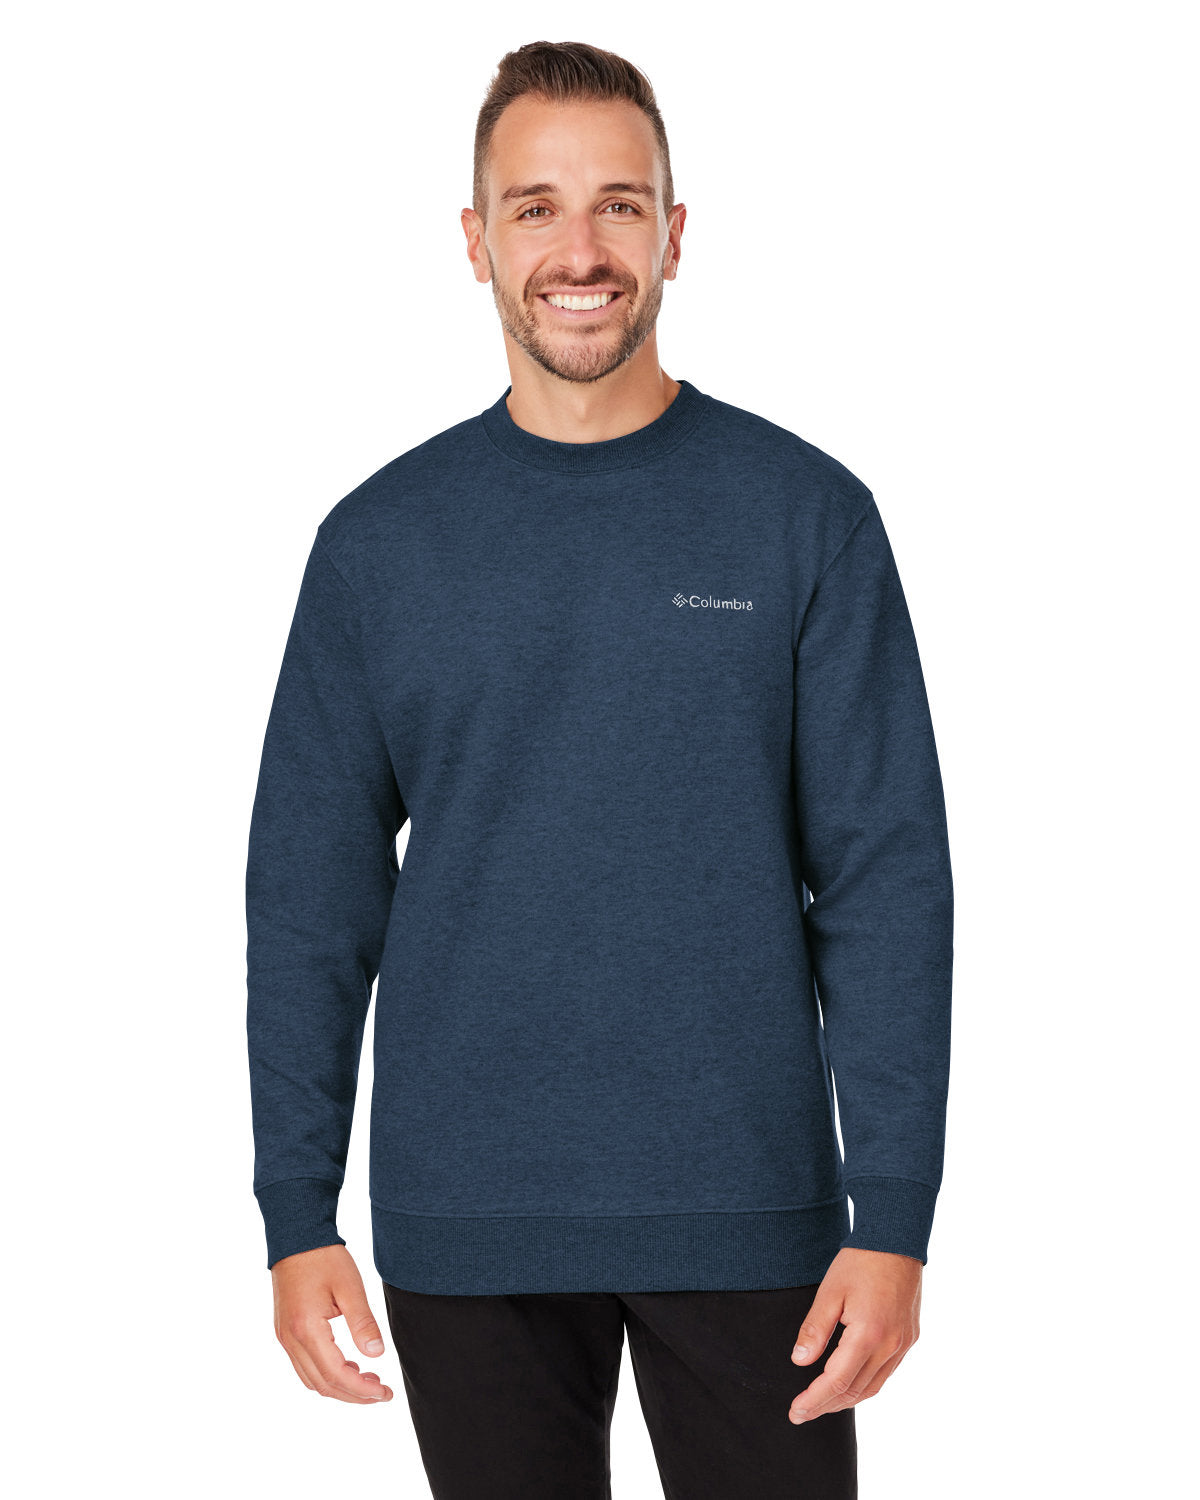 Columbia Men's Hart Mountain Sweater